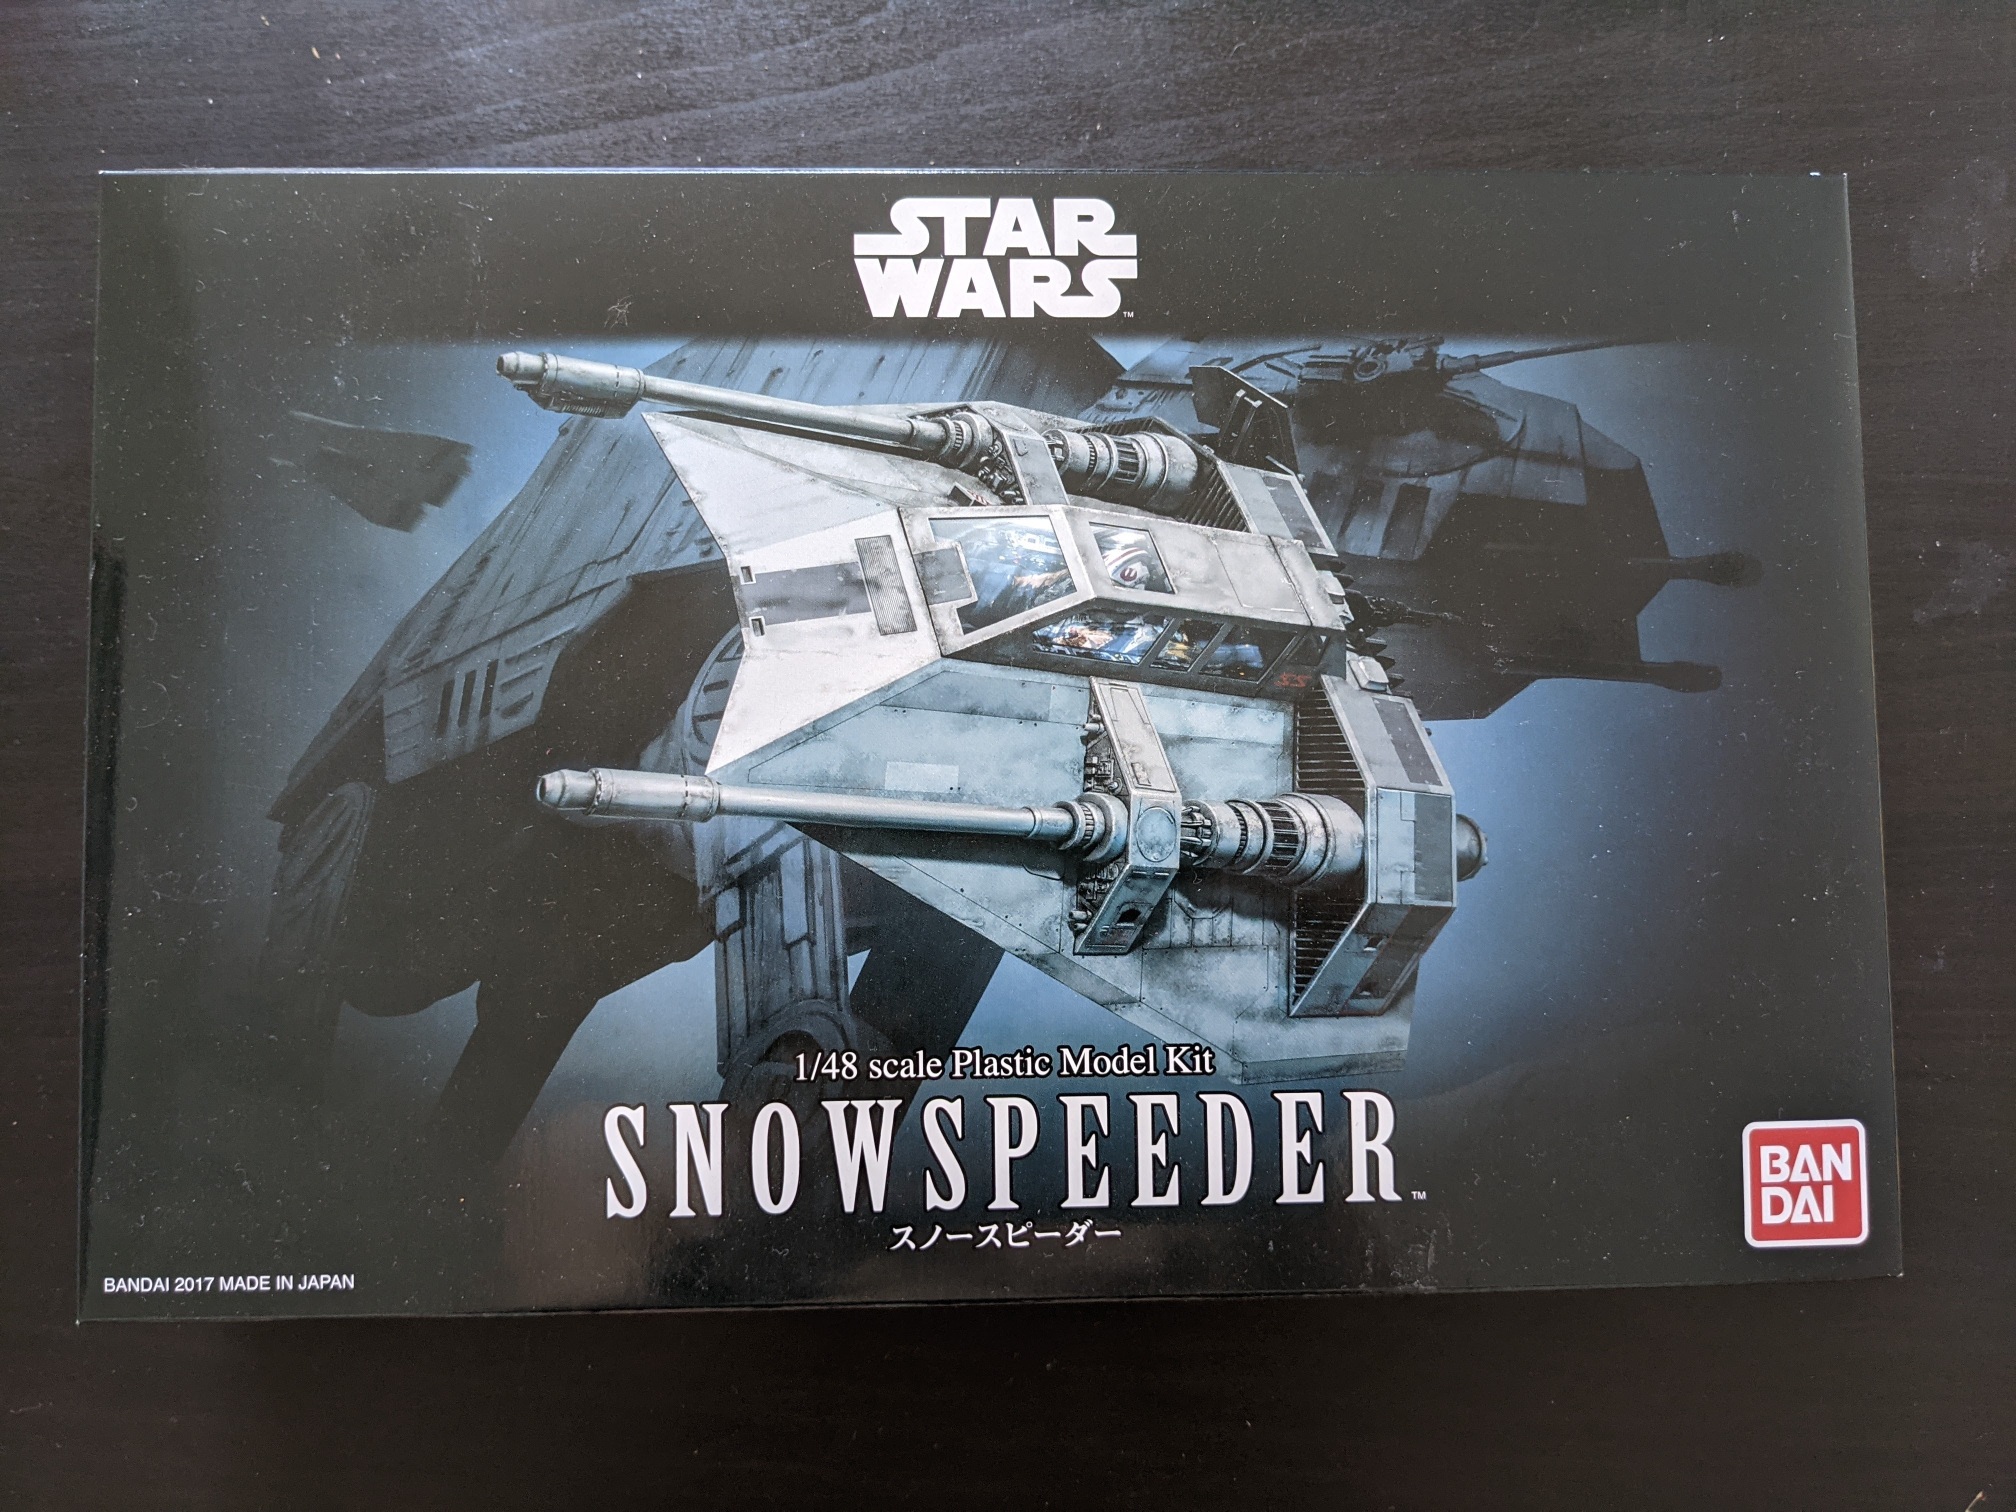 Star Wars snowspeeder model kit 1:48 by Bandai box